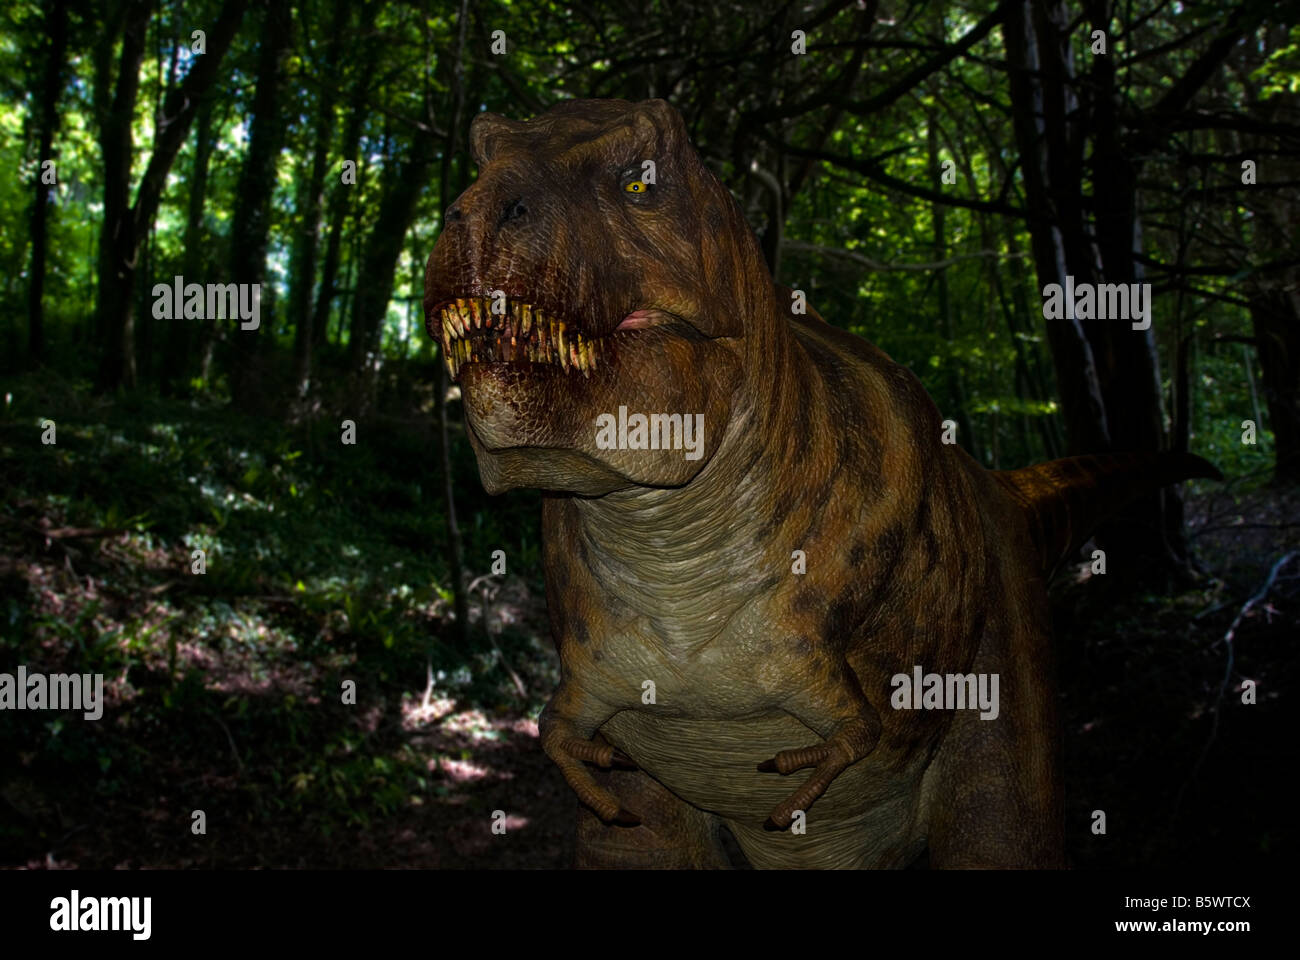 Tyrannosaurus rex (T Rex) dinosaur superimposed in a dark forest environment Stock Photo